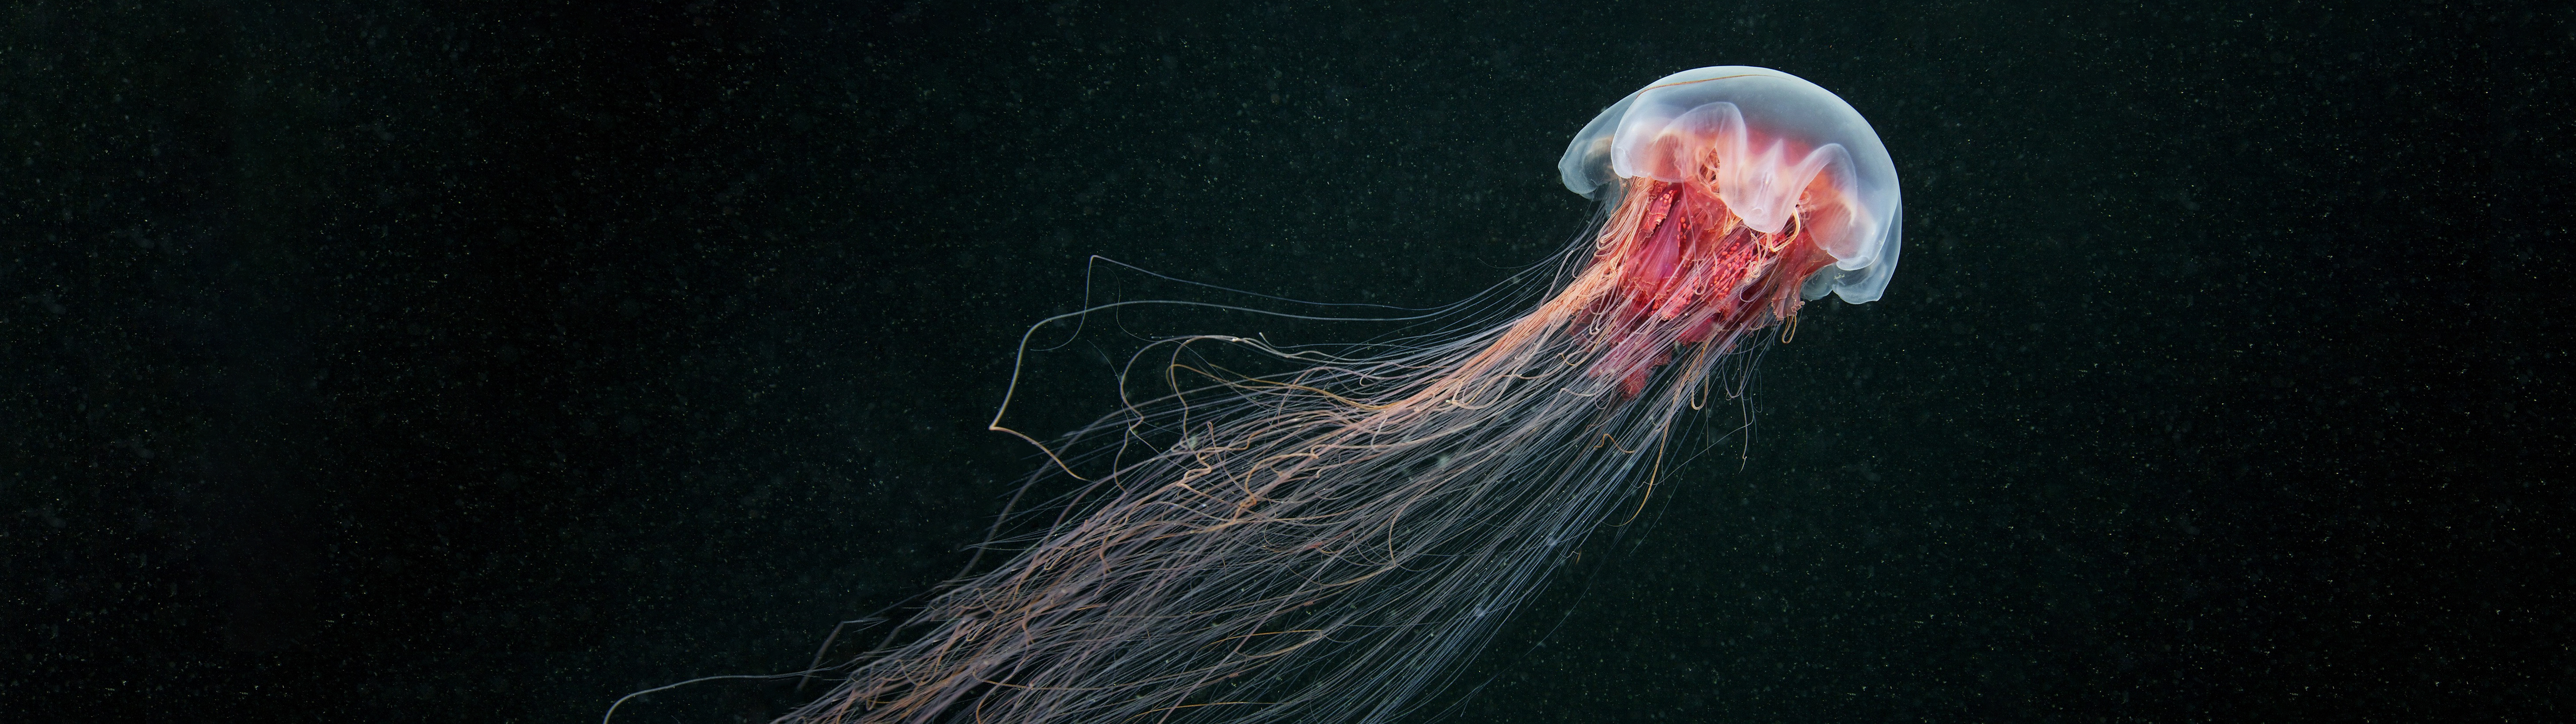 Jellyfish Ultrawide Underwater Animals Sea Life 5120x1440